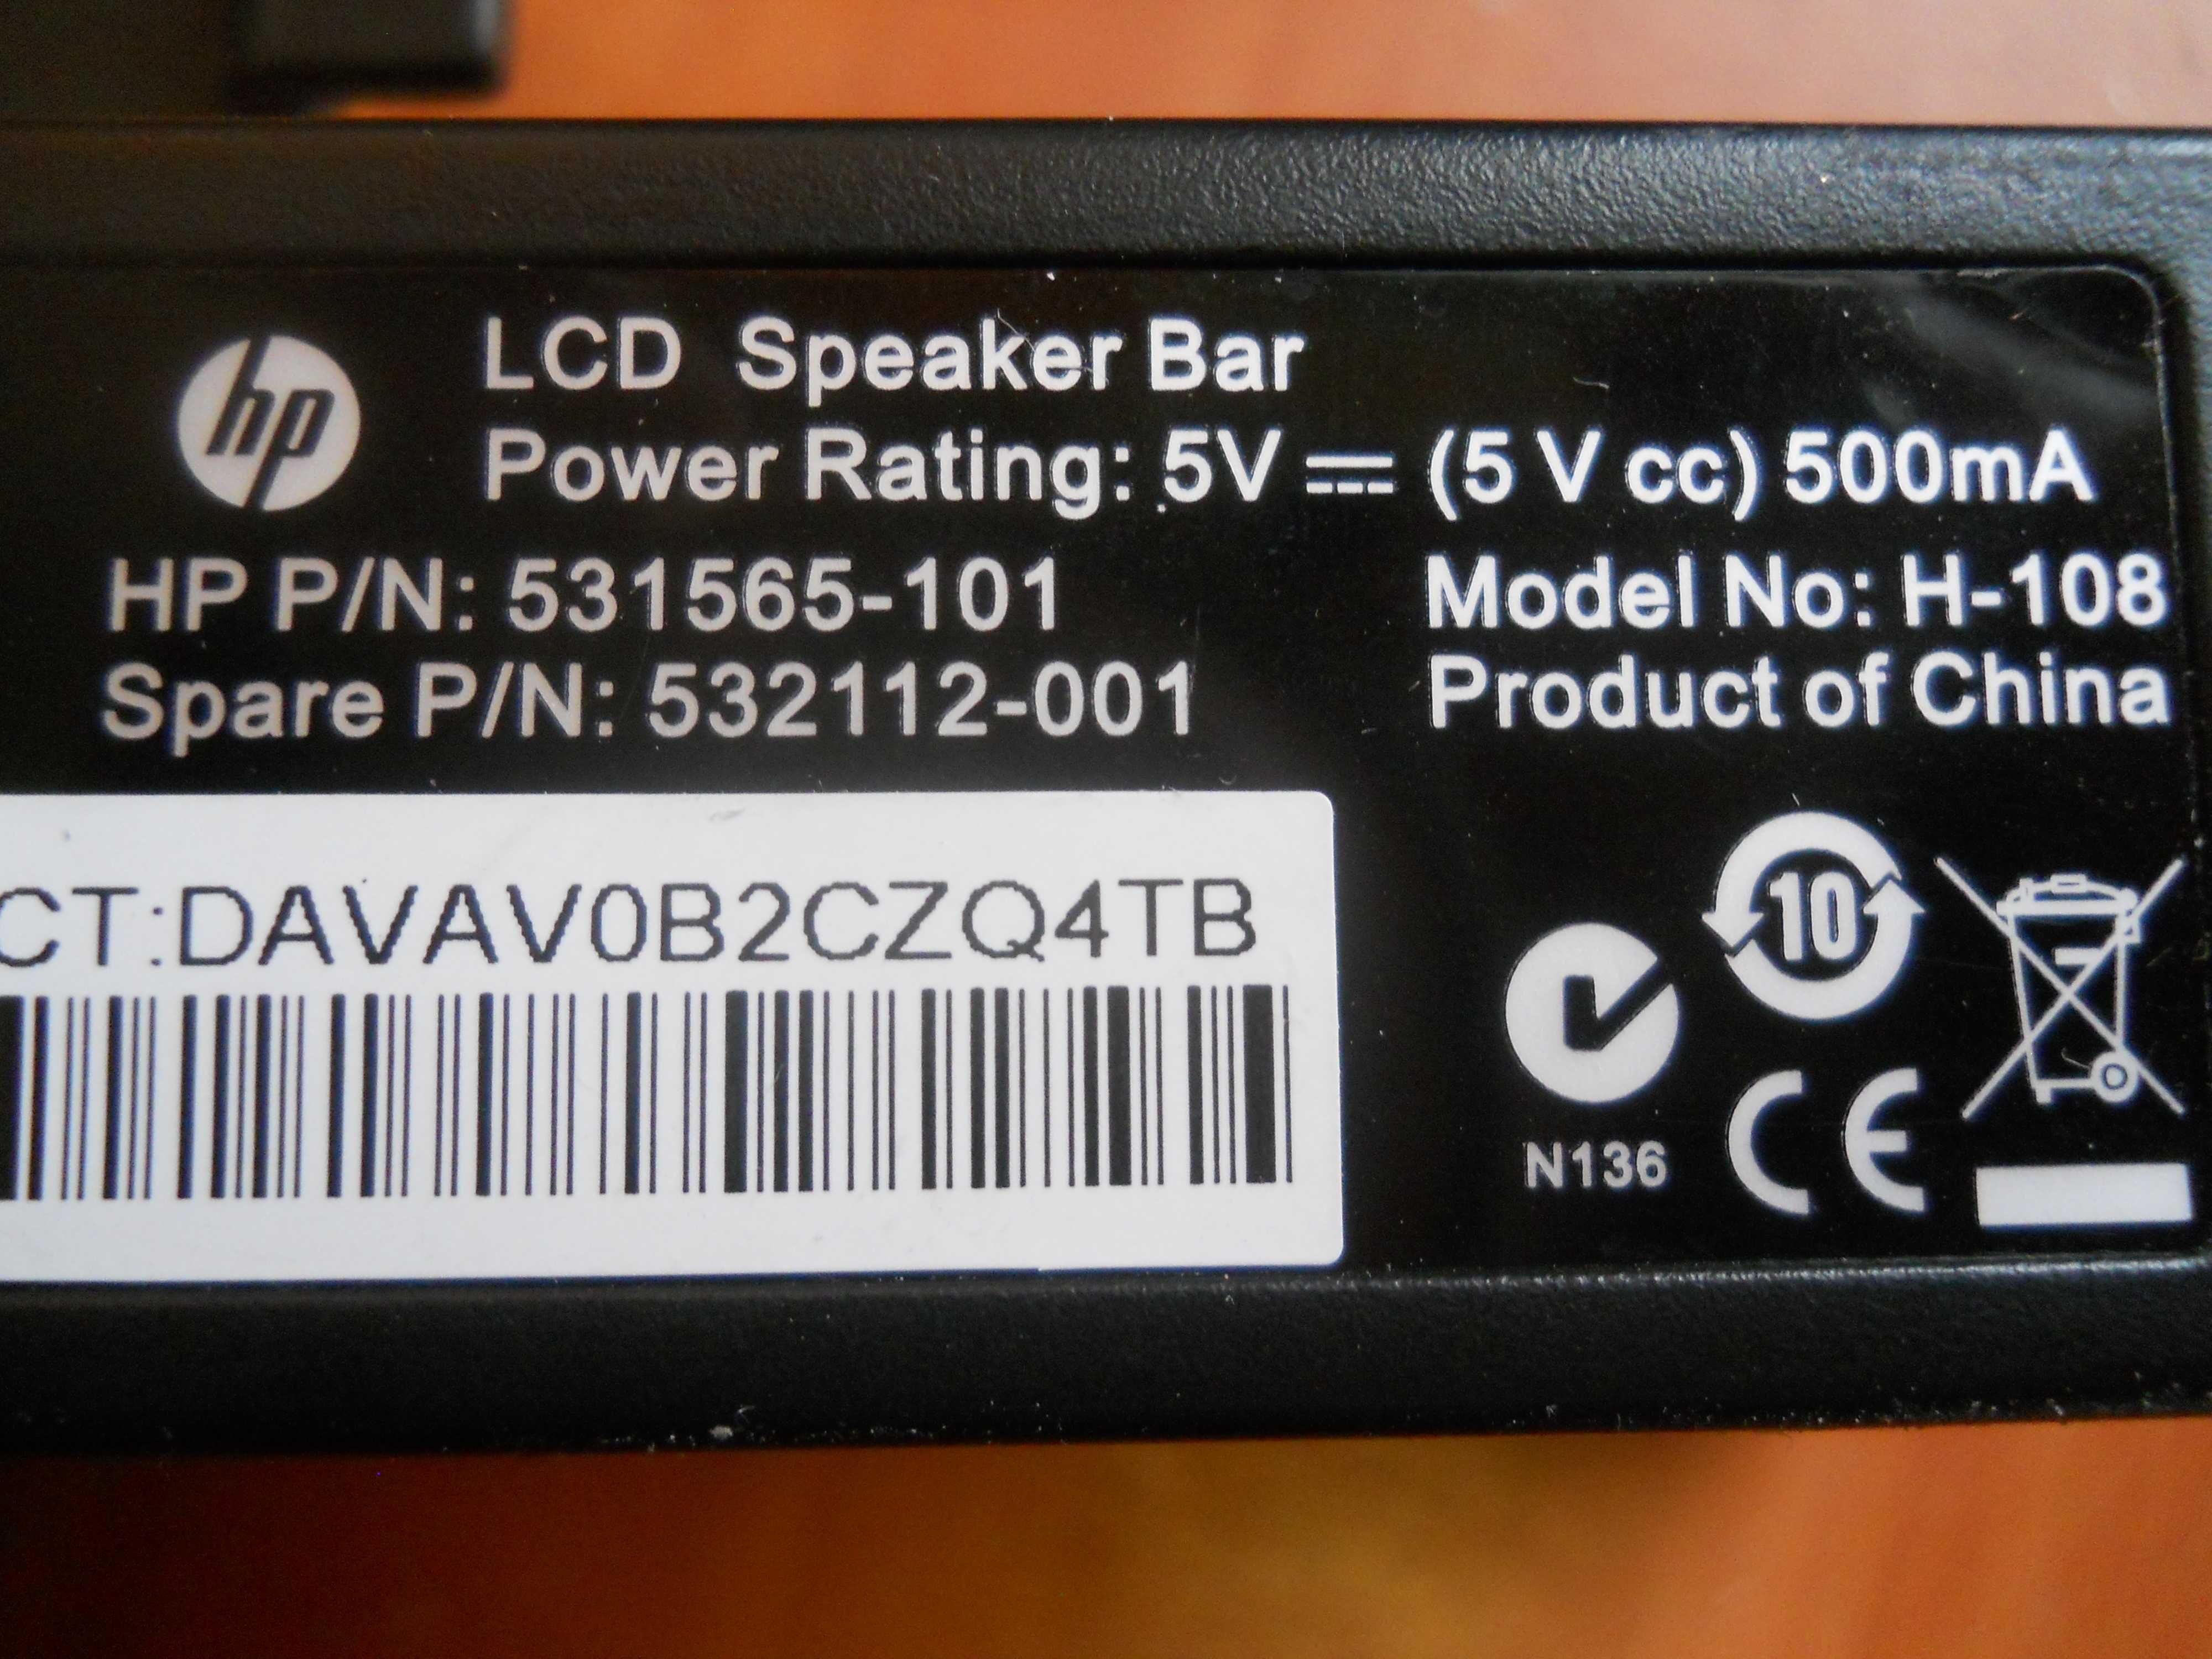 SoundBar pentru monitor HP H-108, USB